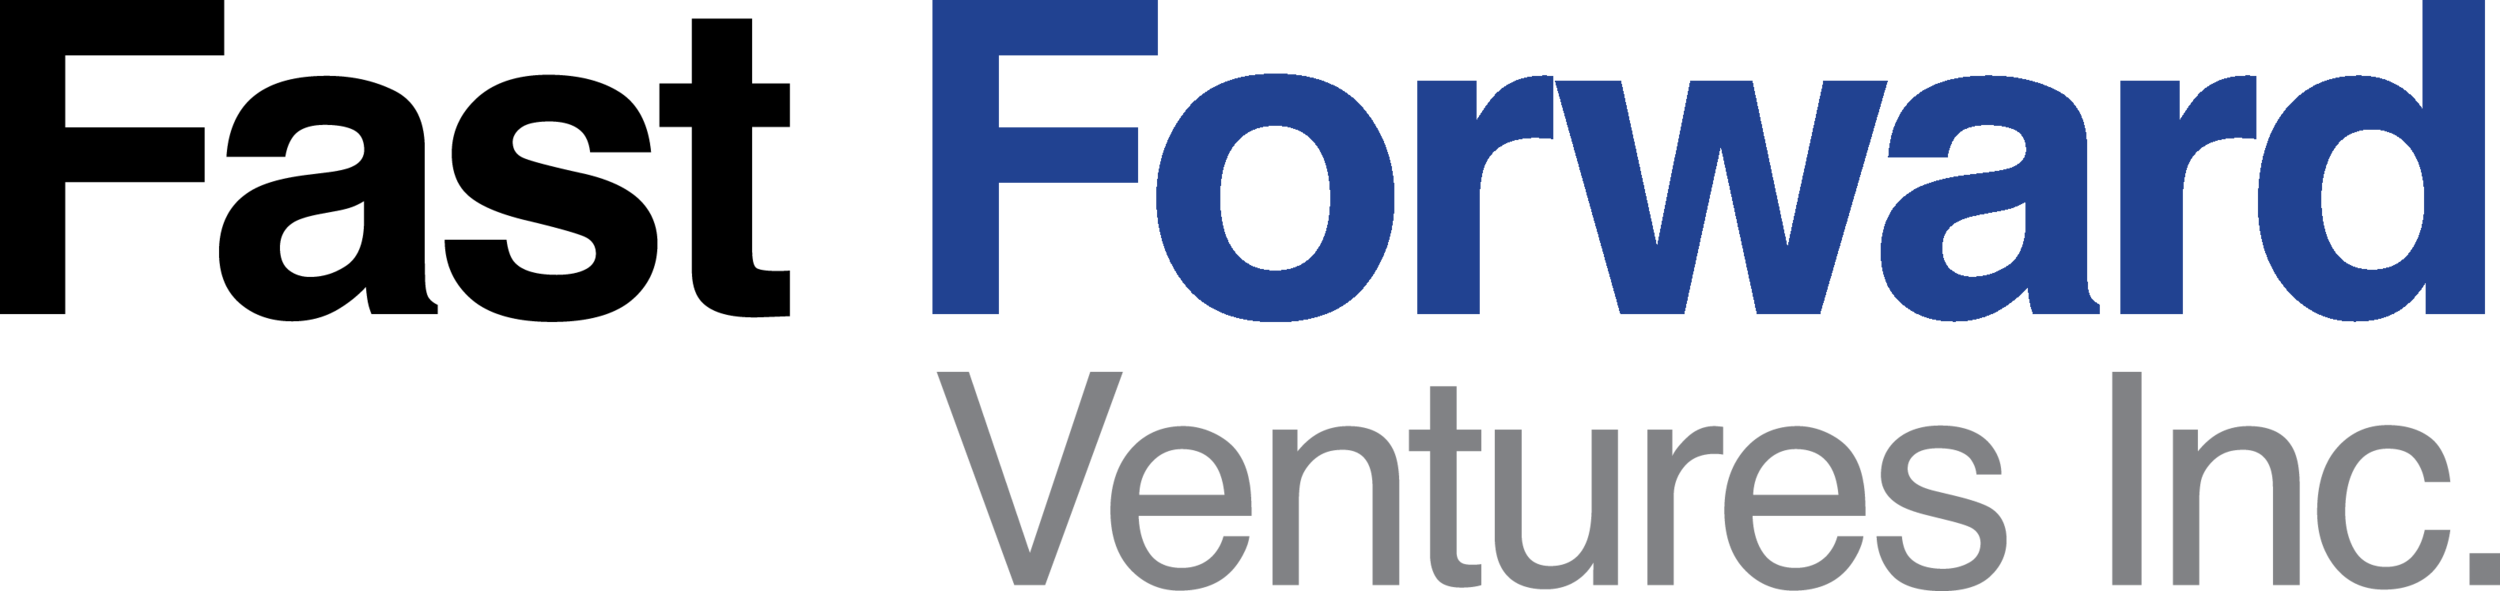 Fast Forward Ventures Inc.